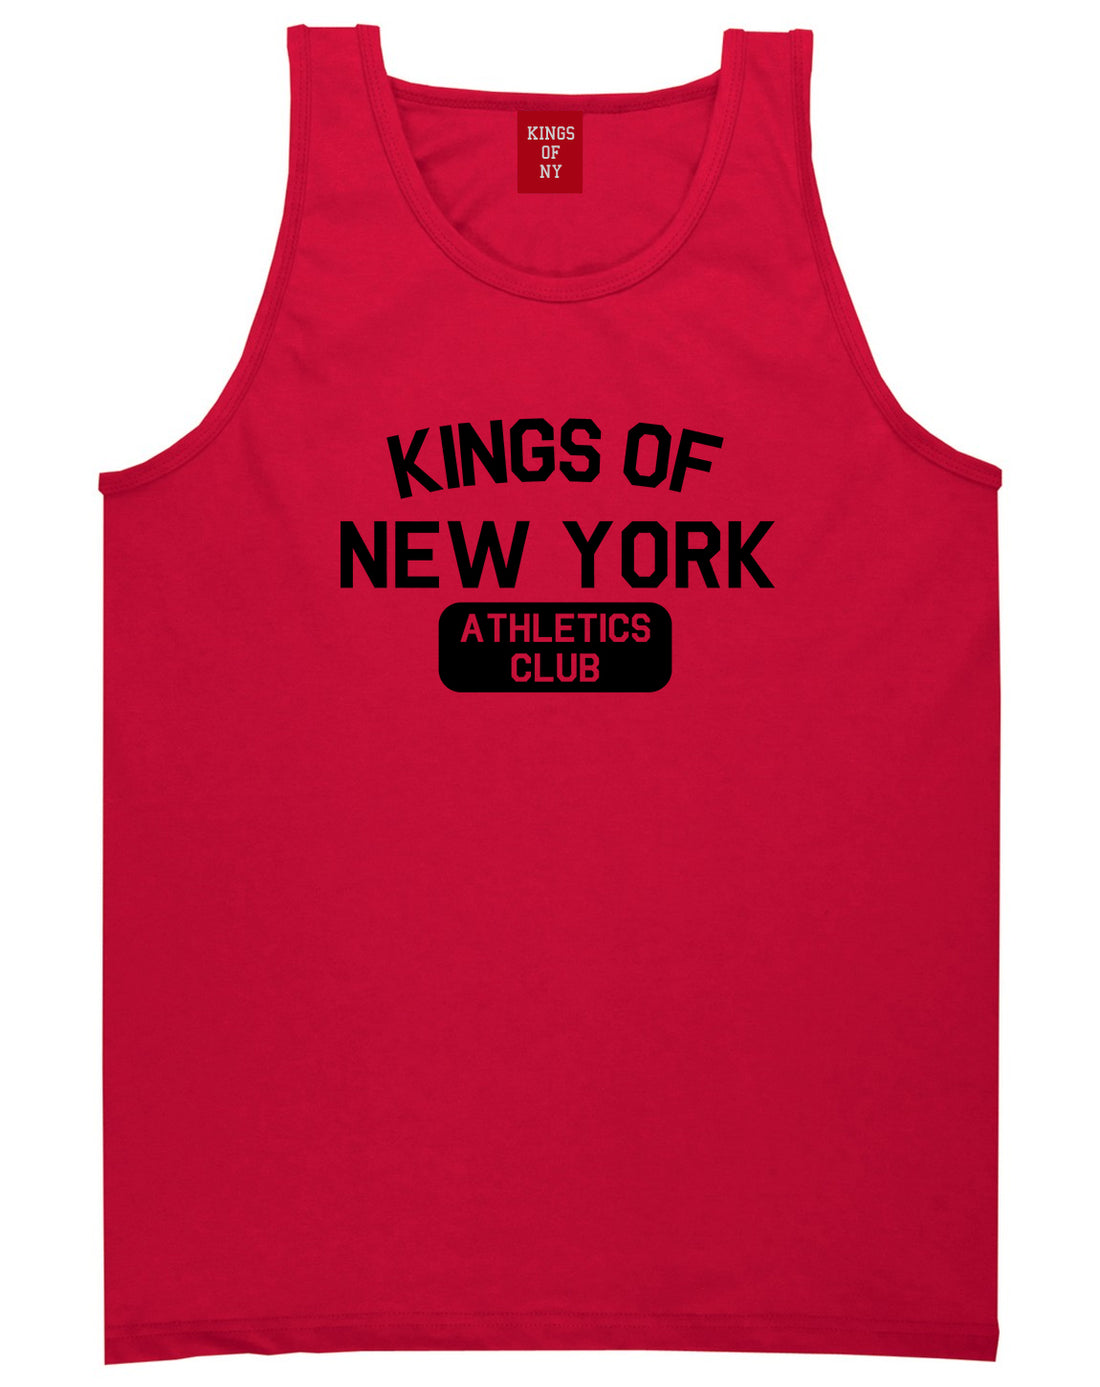 Kings Of New York Athletics Club Mens Tank Top Shirt Red